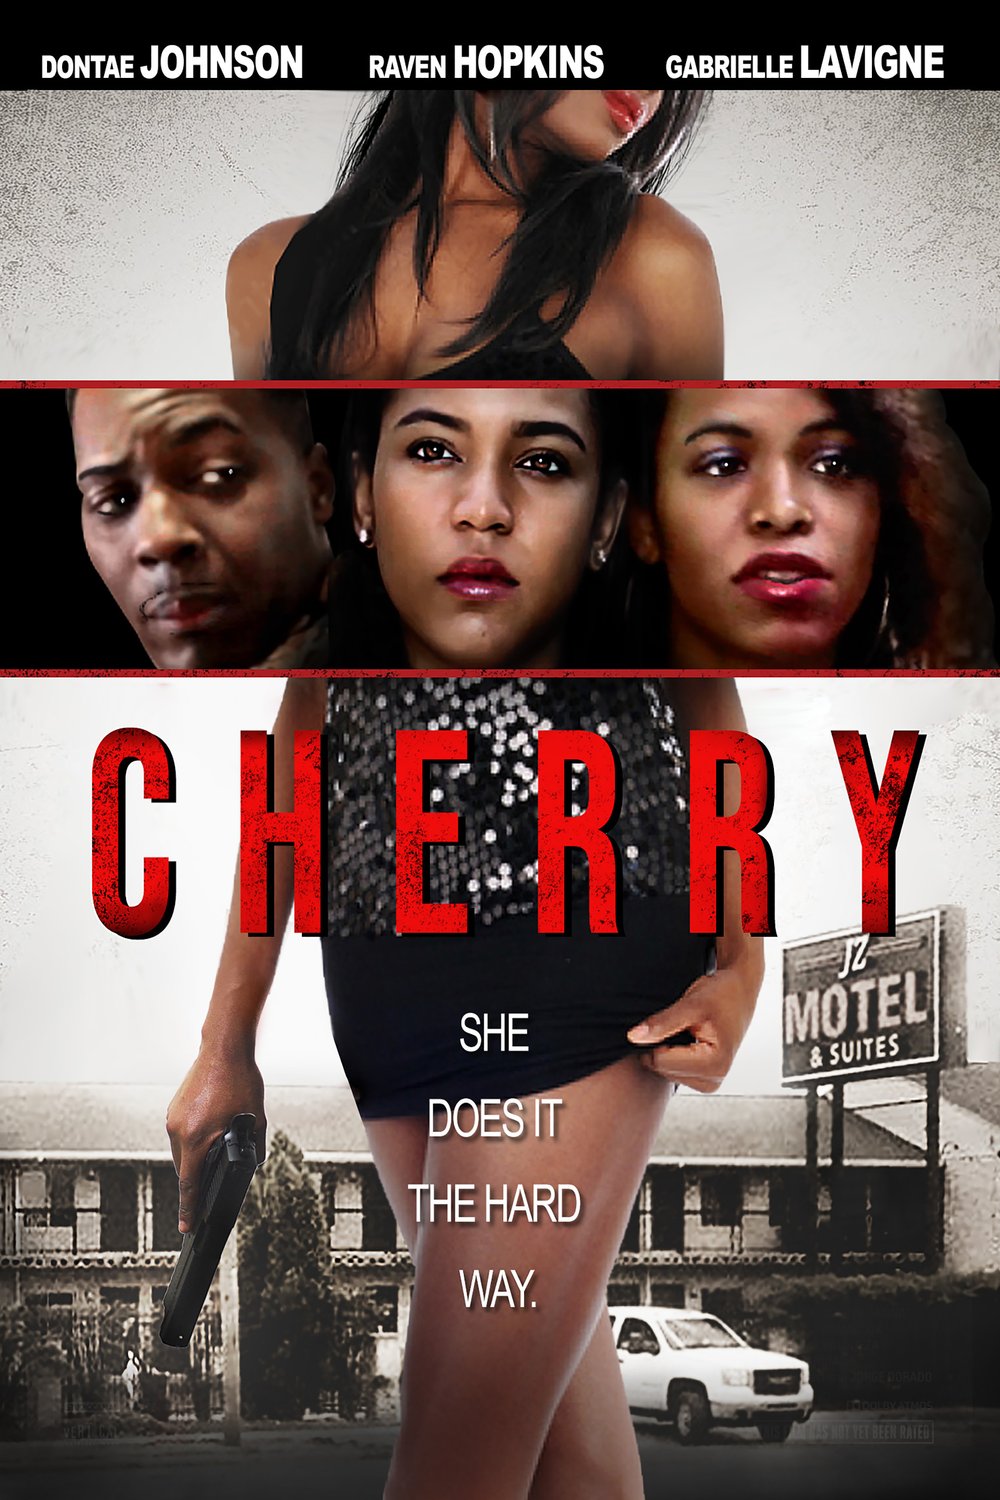 L'affiche du film Cherry